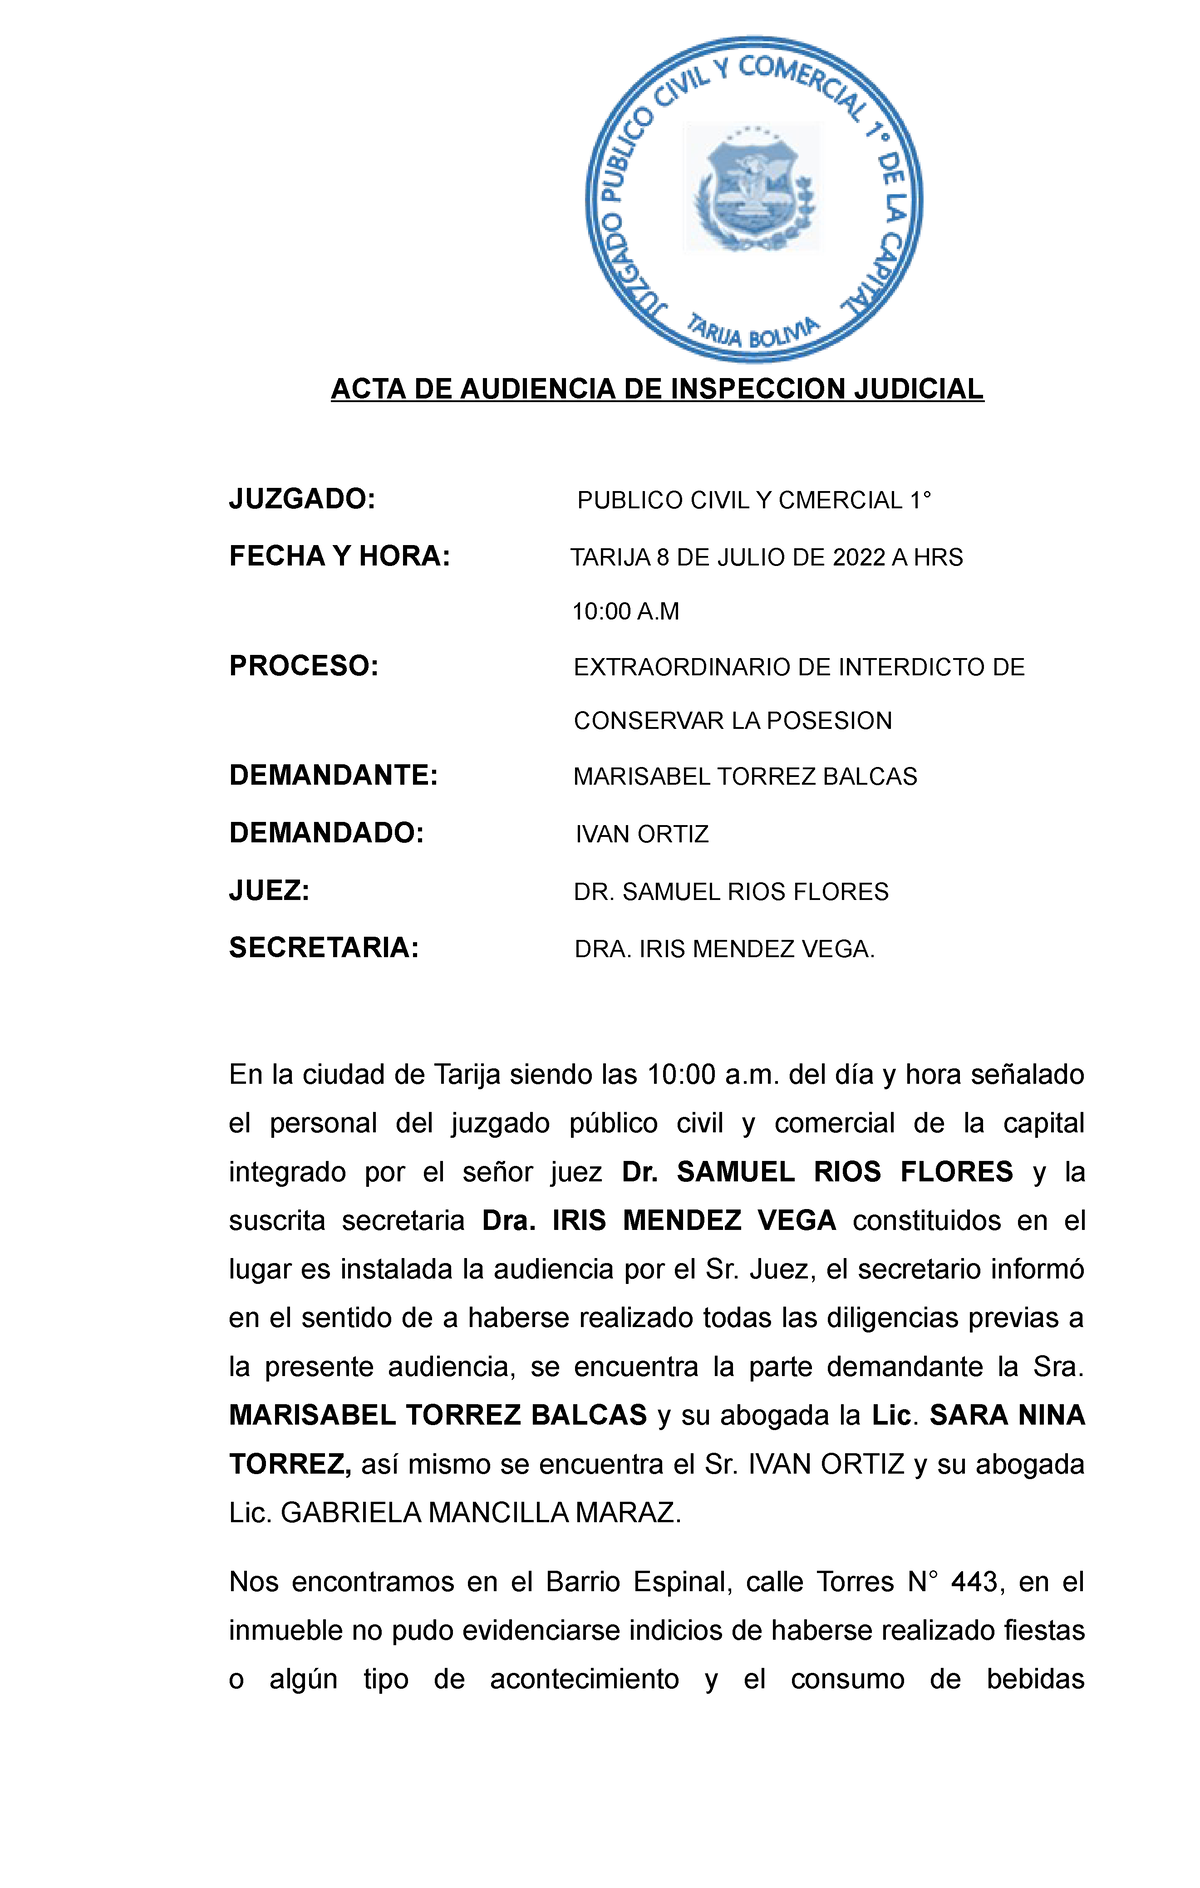  ACTA DE Inspeccion Judicial - ACTA DE AUDIENCIA DE INSPECCION JUDICIAL  JUZGADO: PUBLICO CIVIL Y - Studocu